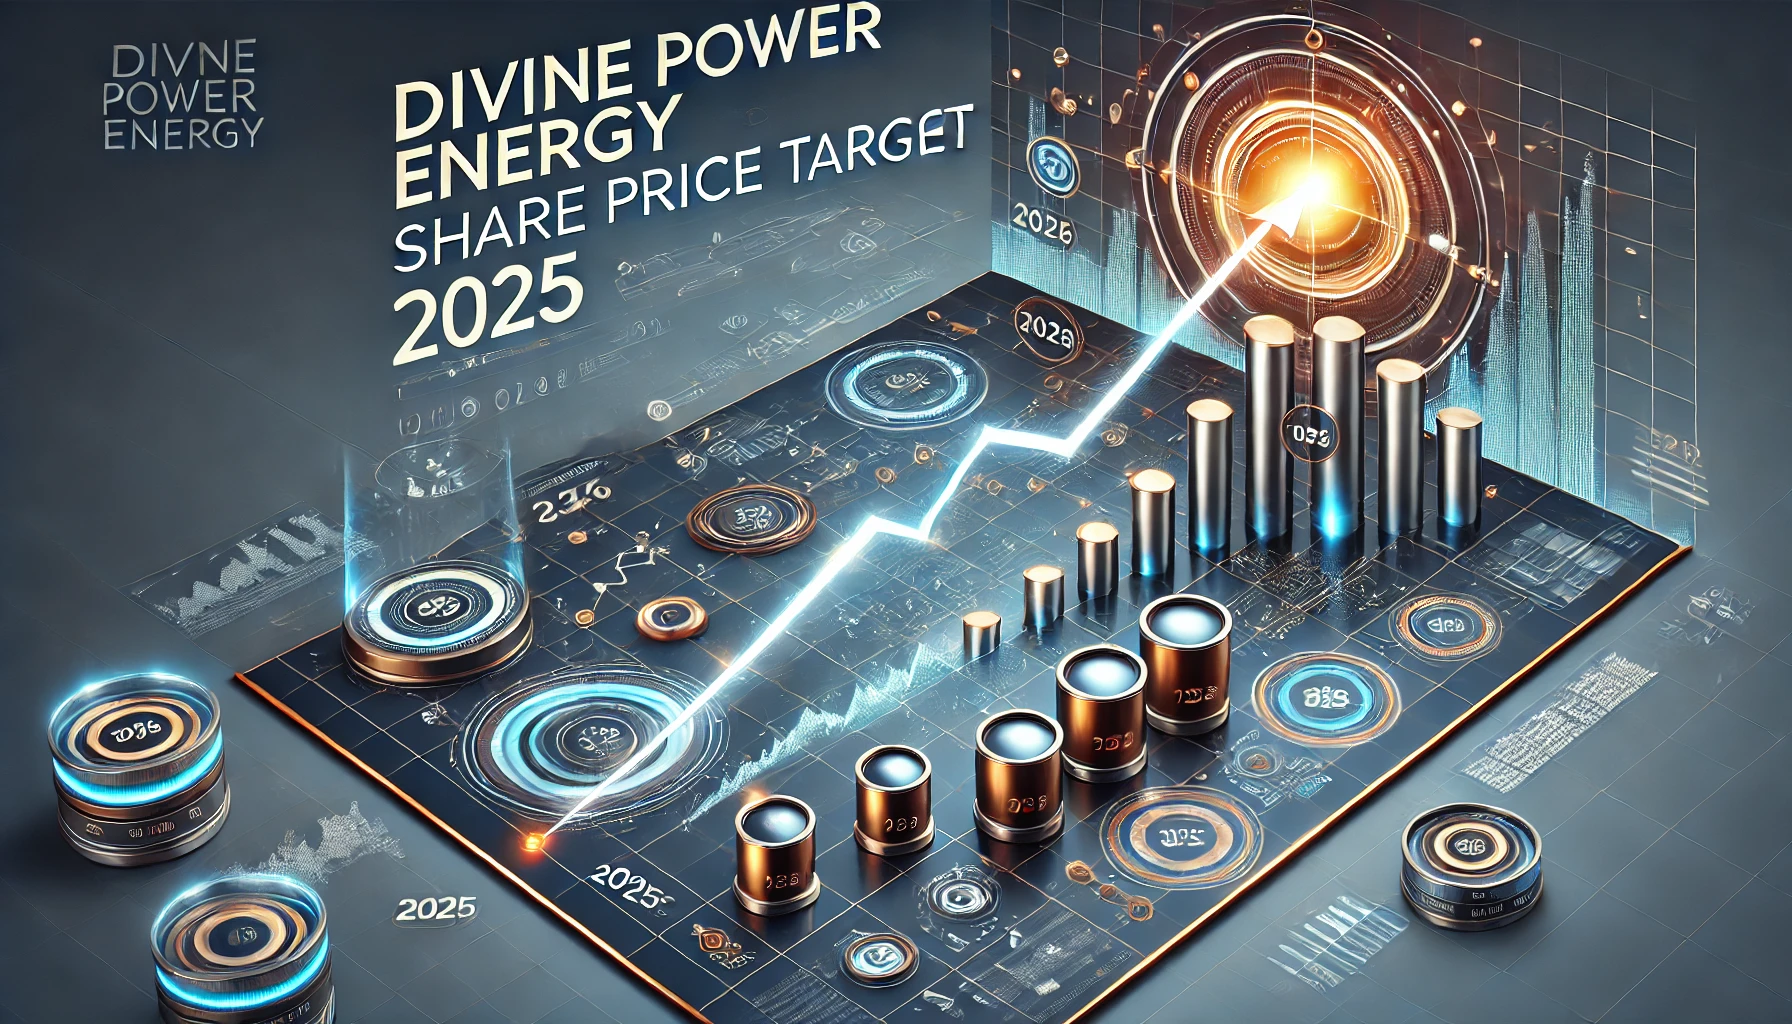 Divine Power Energy Share Price Target 2025